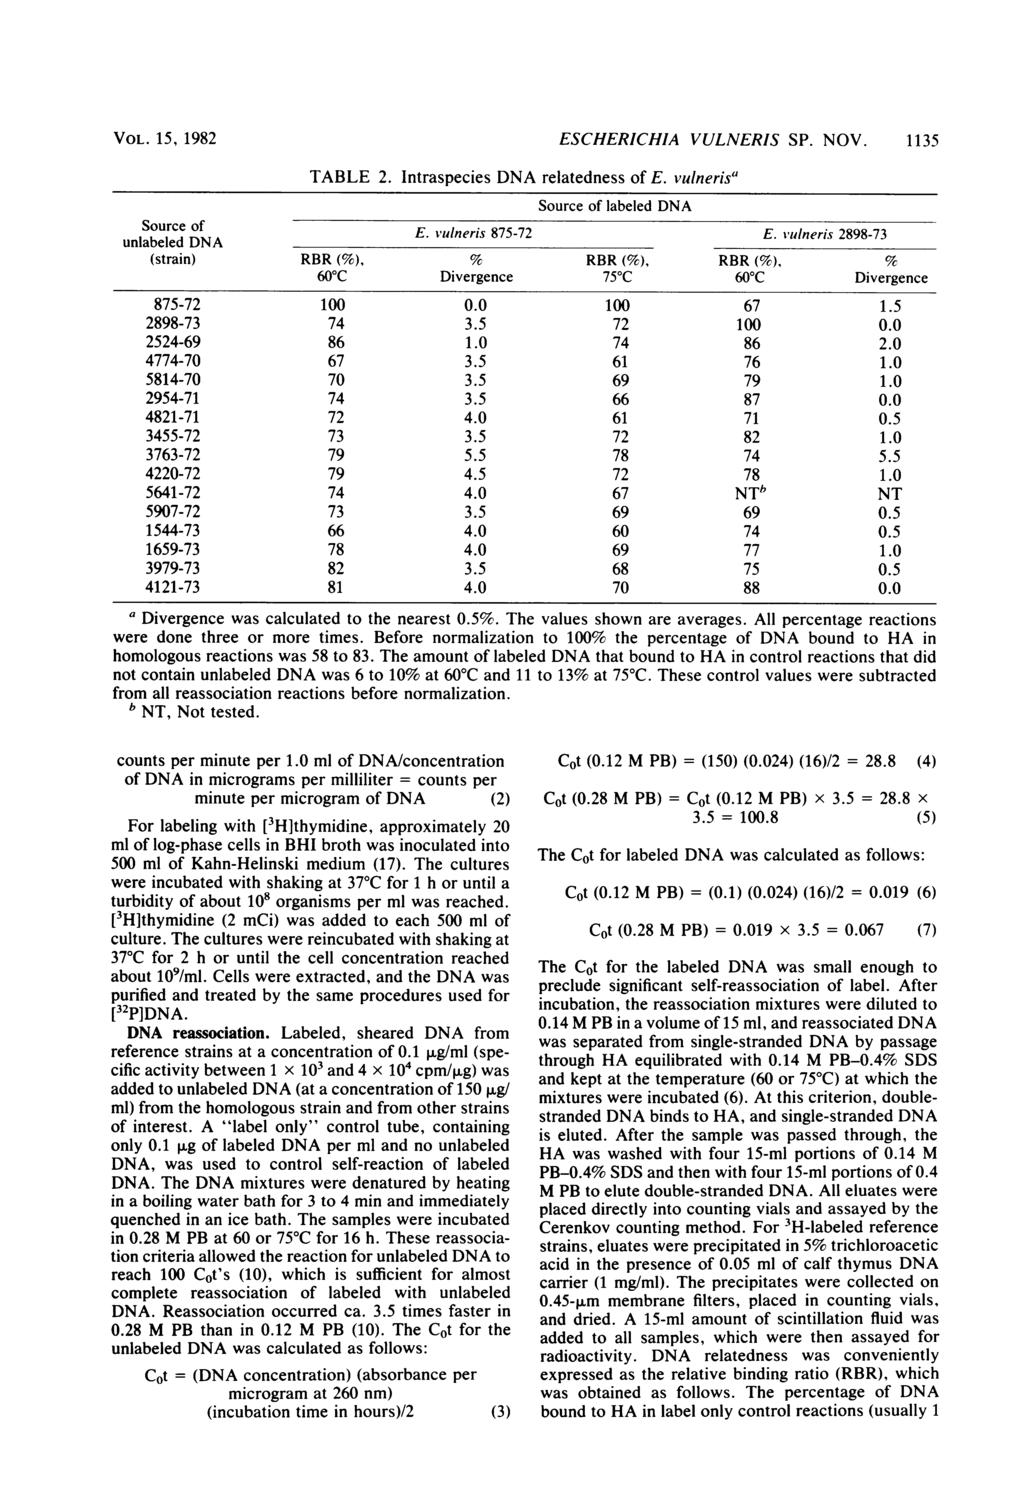 VOL. 15, 1982 TABLE 2. ESCHERICHIA VULNERIS SP. NOV. 1135 Intraspecies DNA relatedness of E. vulnerisa Source of labeled DNA unlabeled DNA E. vulneris 875-72 E.